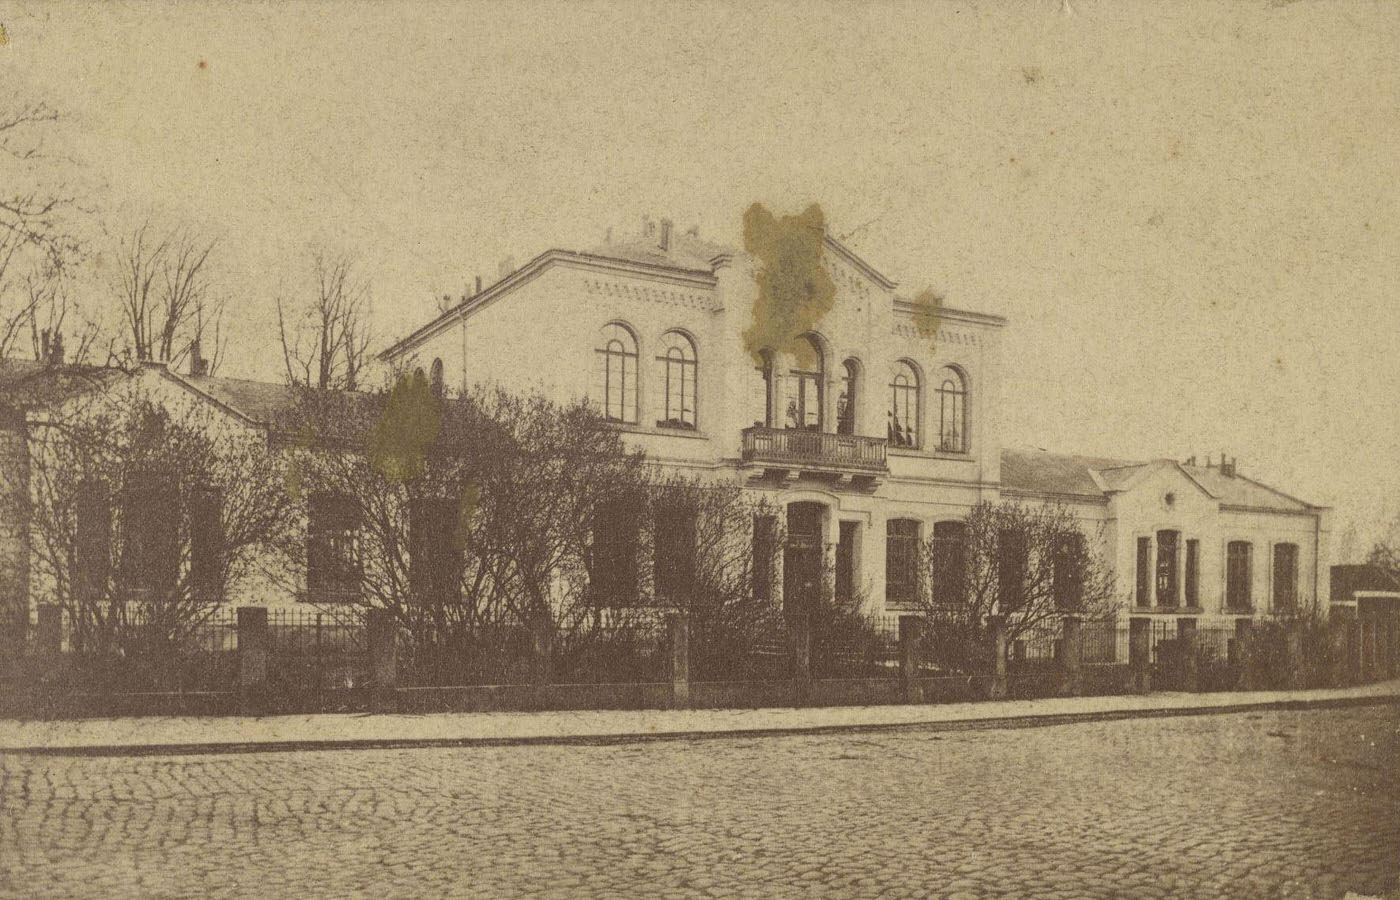 Building in Gottingen by H. Hoyer, 1880.